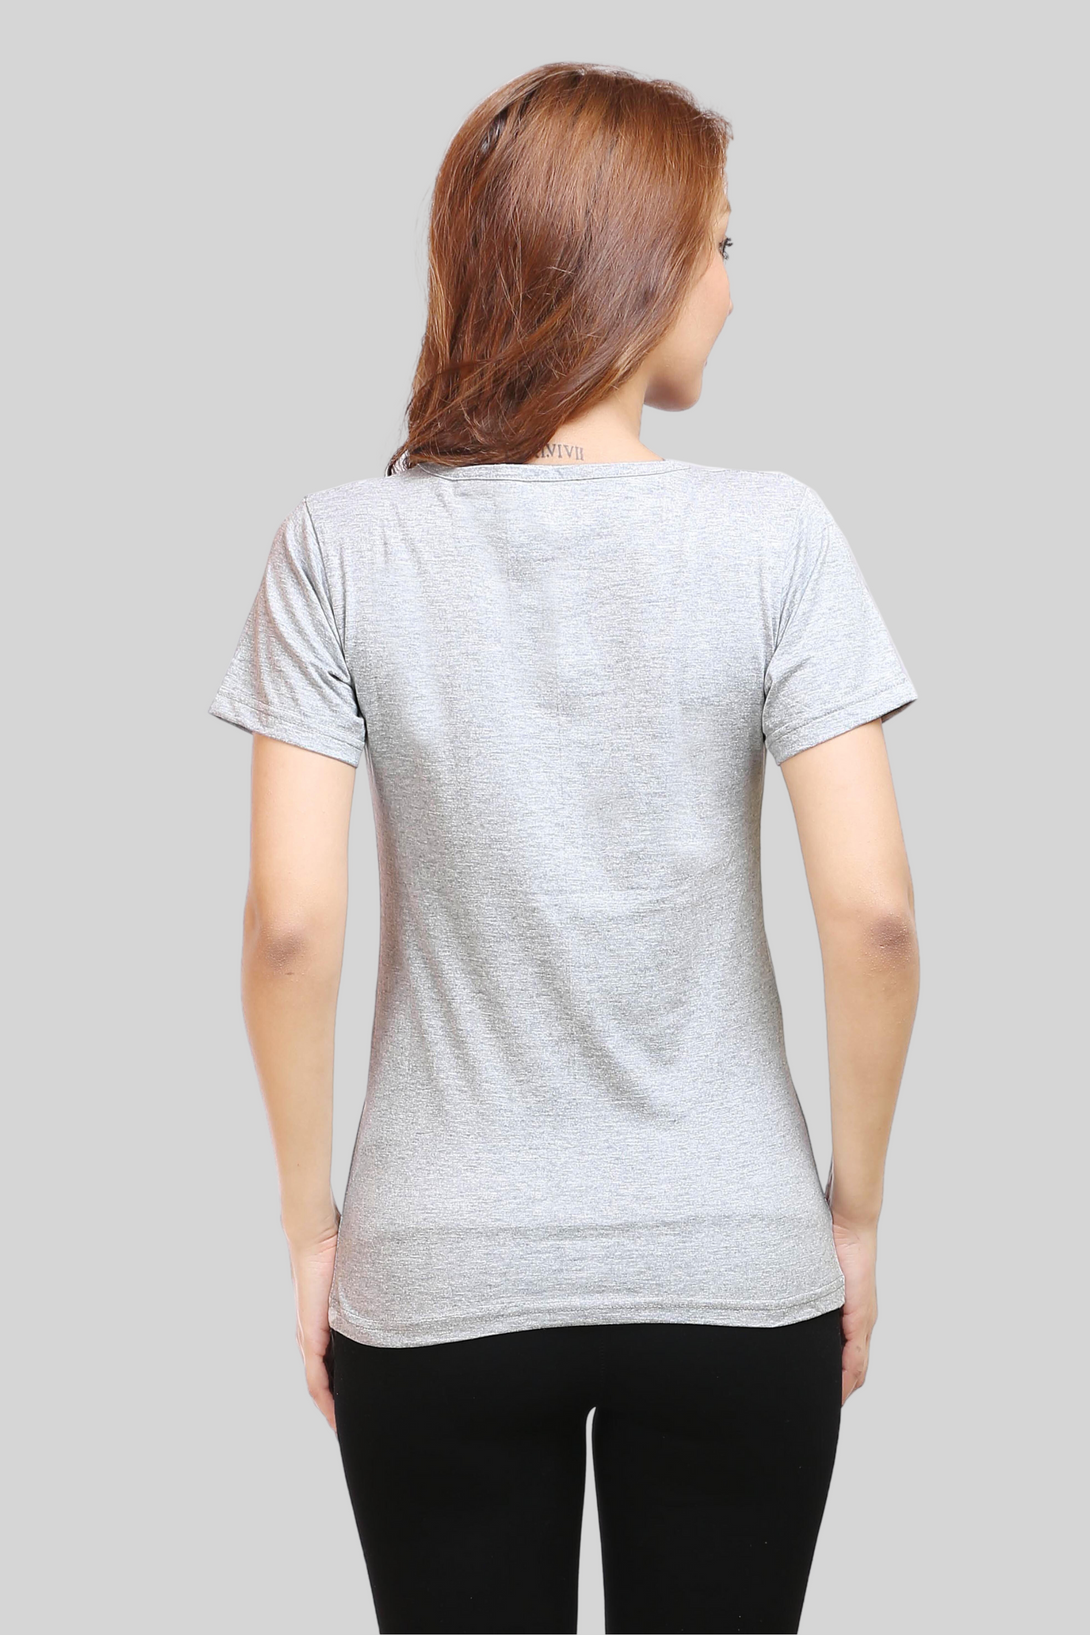 Grey Melange Scoop Neck T-Shirt For Women - WowWaves - 3